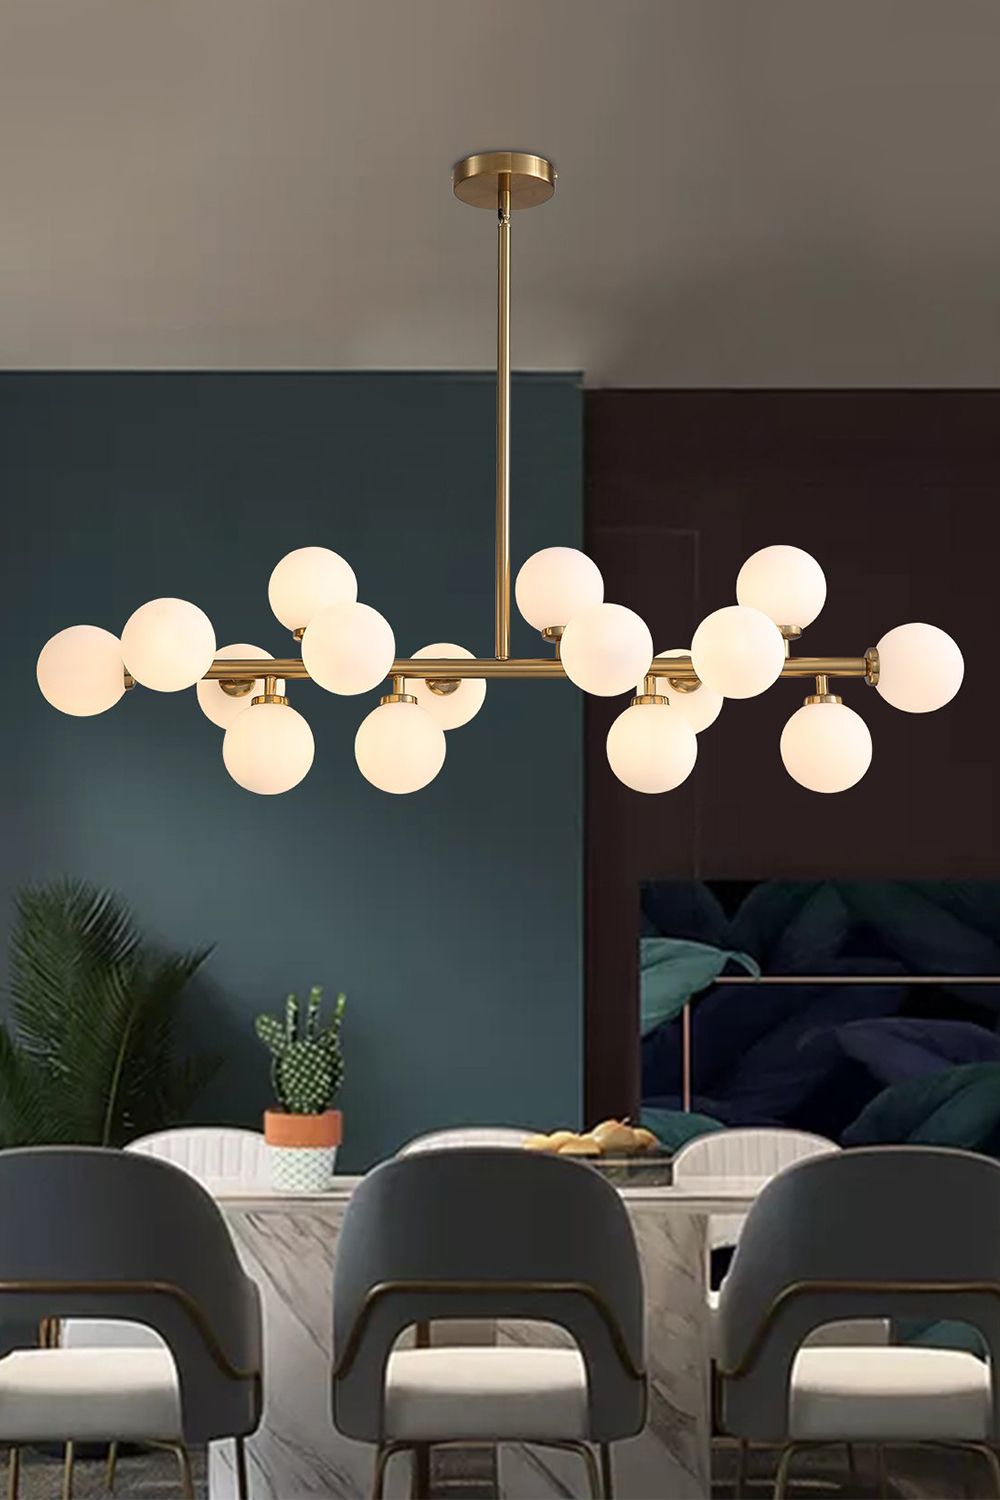 Chandelier In The Living Room : Stunning Chandelier Adds Elegance to Living Room Decor